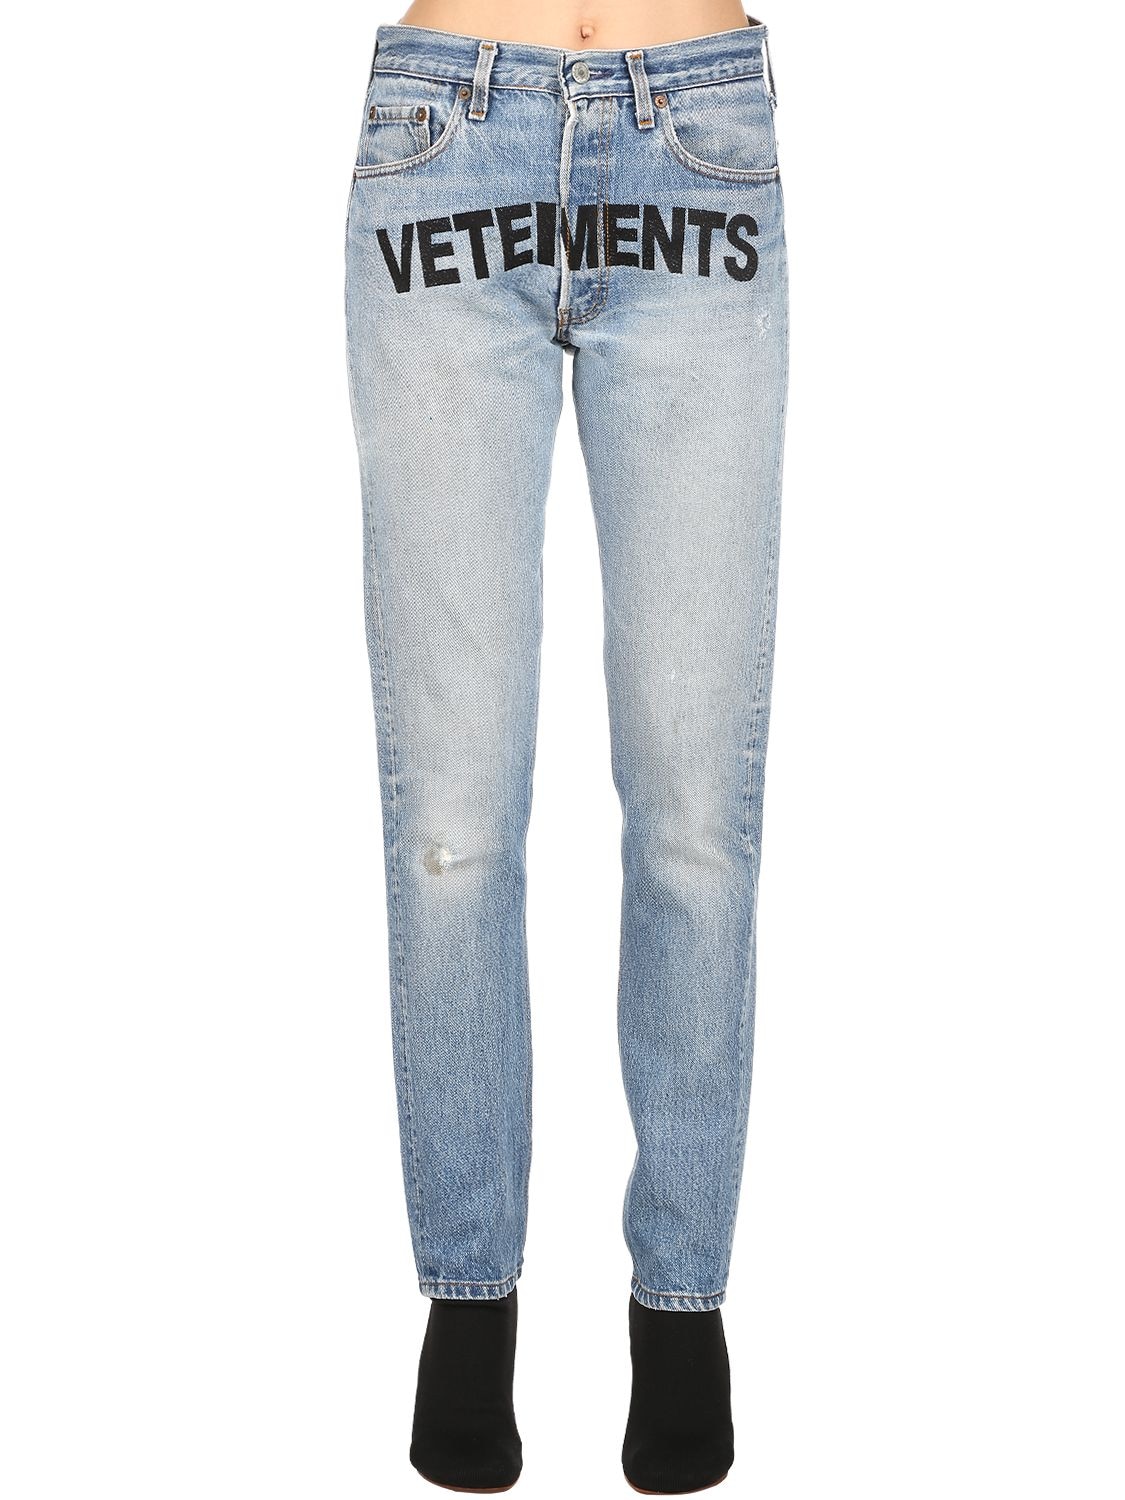 VETEMENTS LEVI'S修身版型LOGO印图牛仔裤,67I51Y007-QkxVRQ2